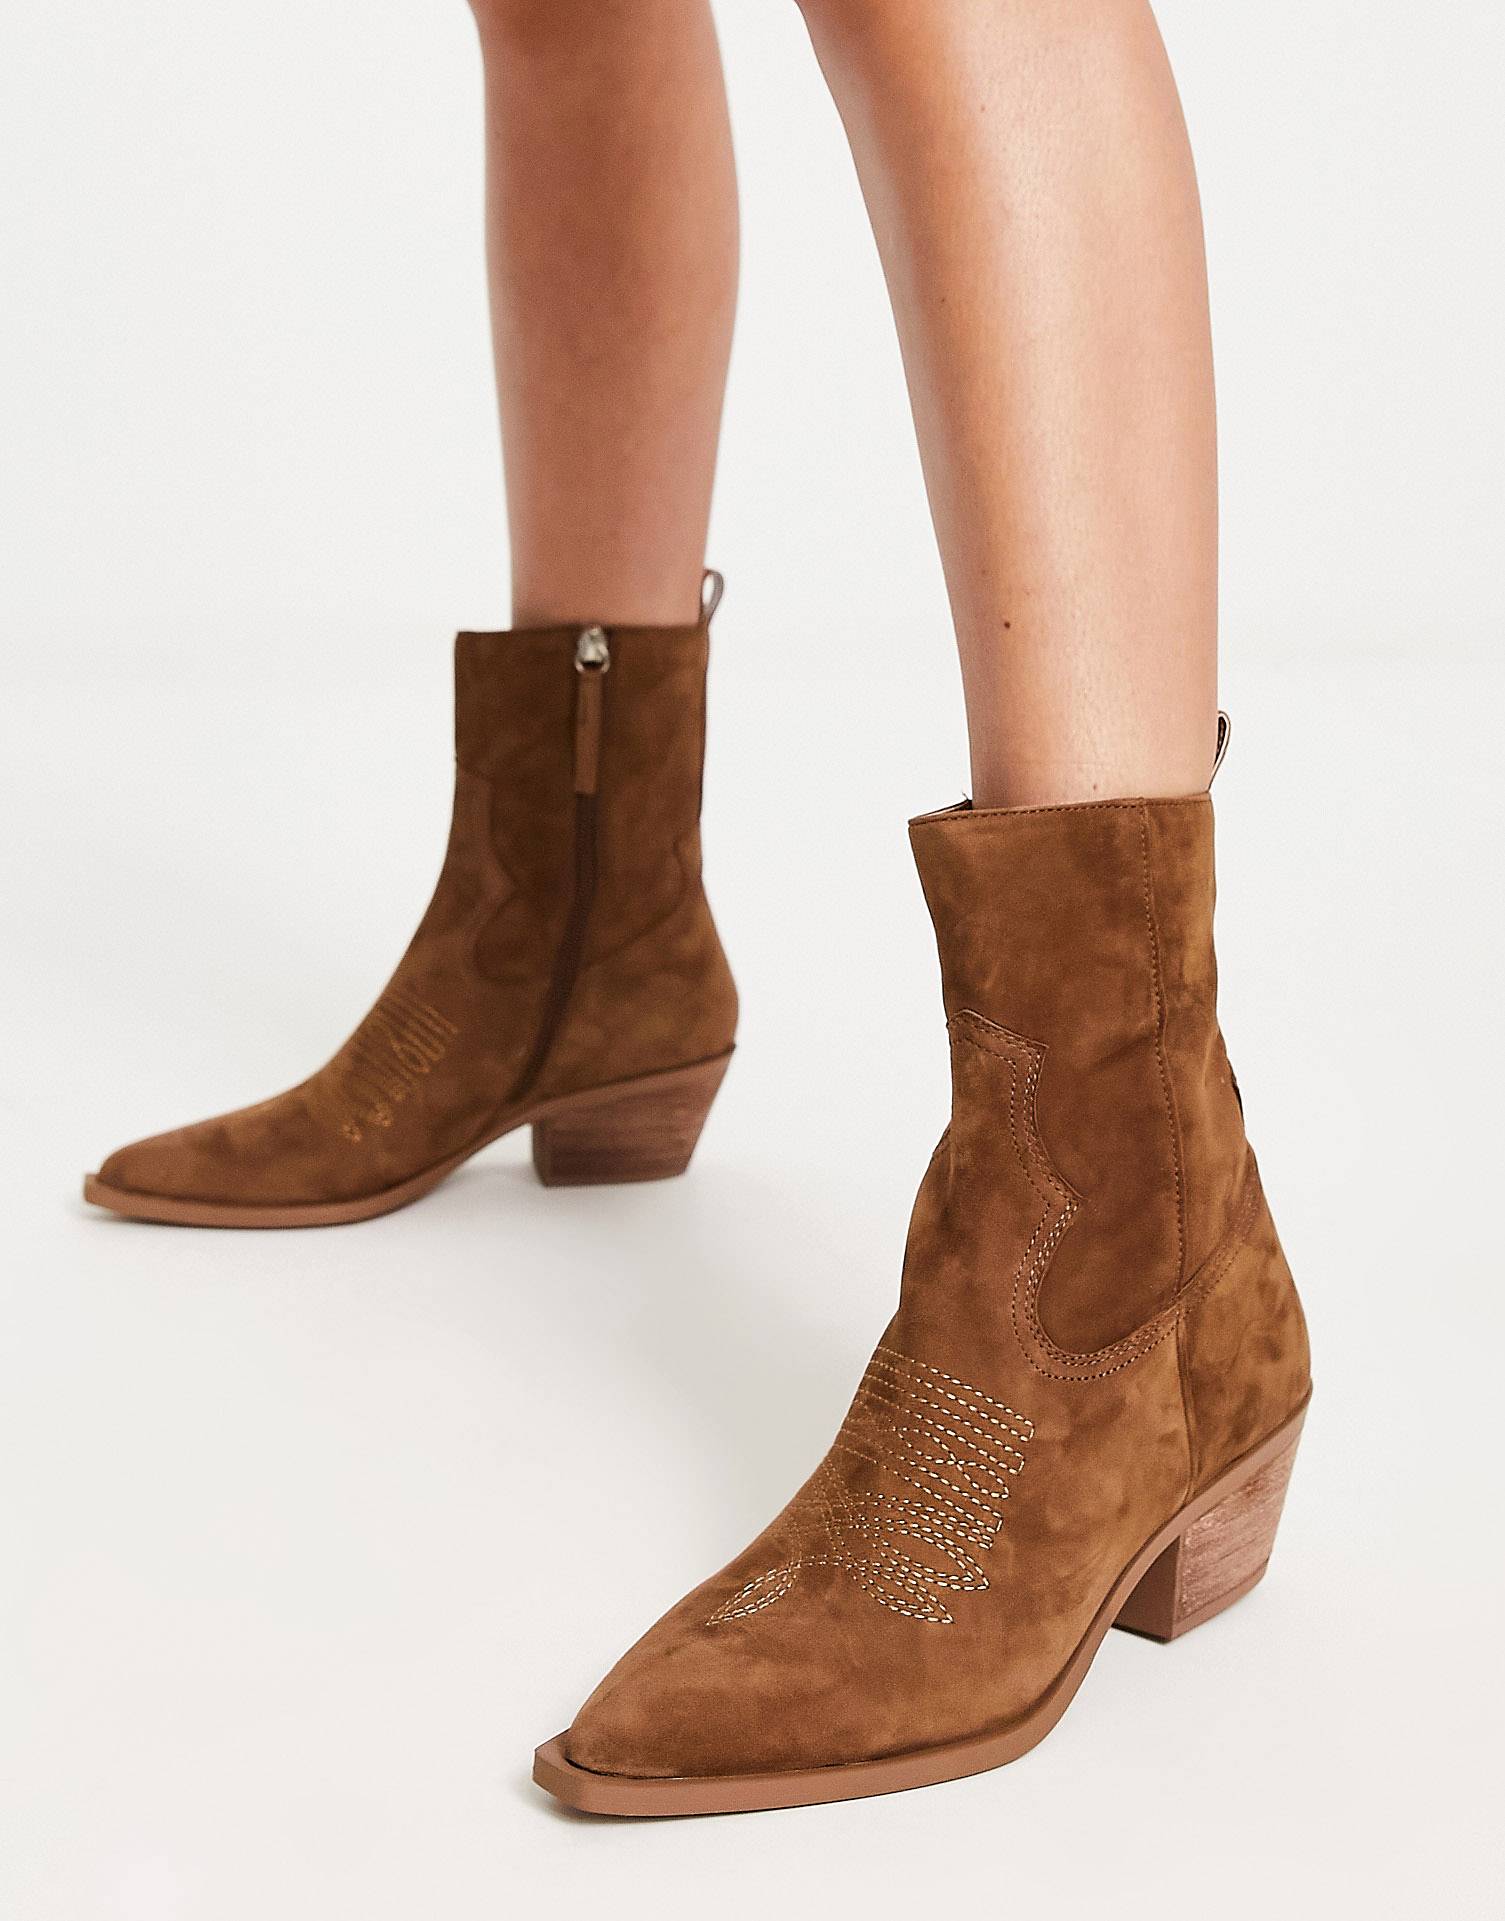 Steve Madden Kendal western boots in chestnut suede-Brown